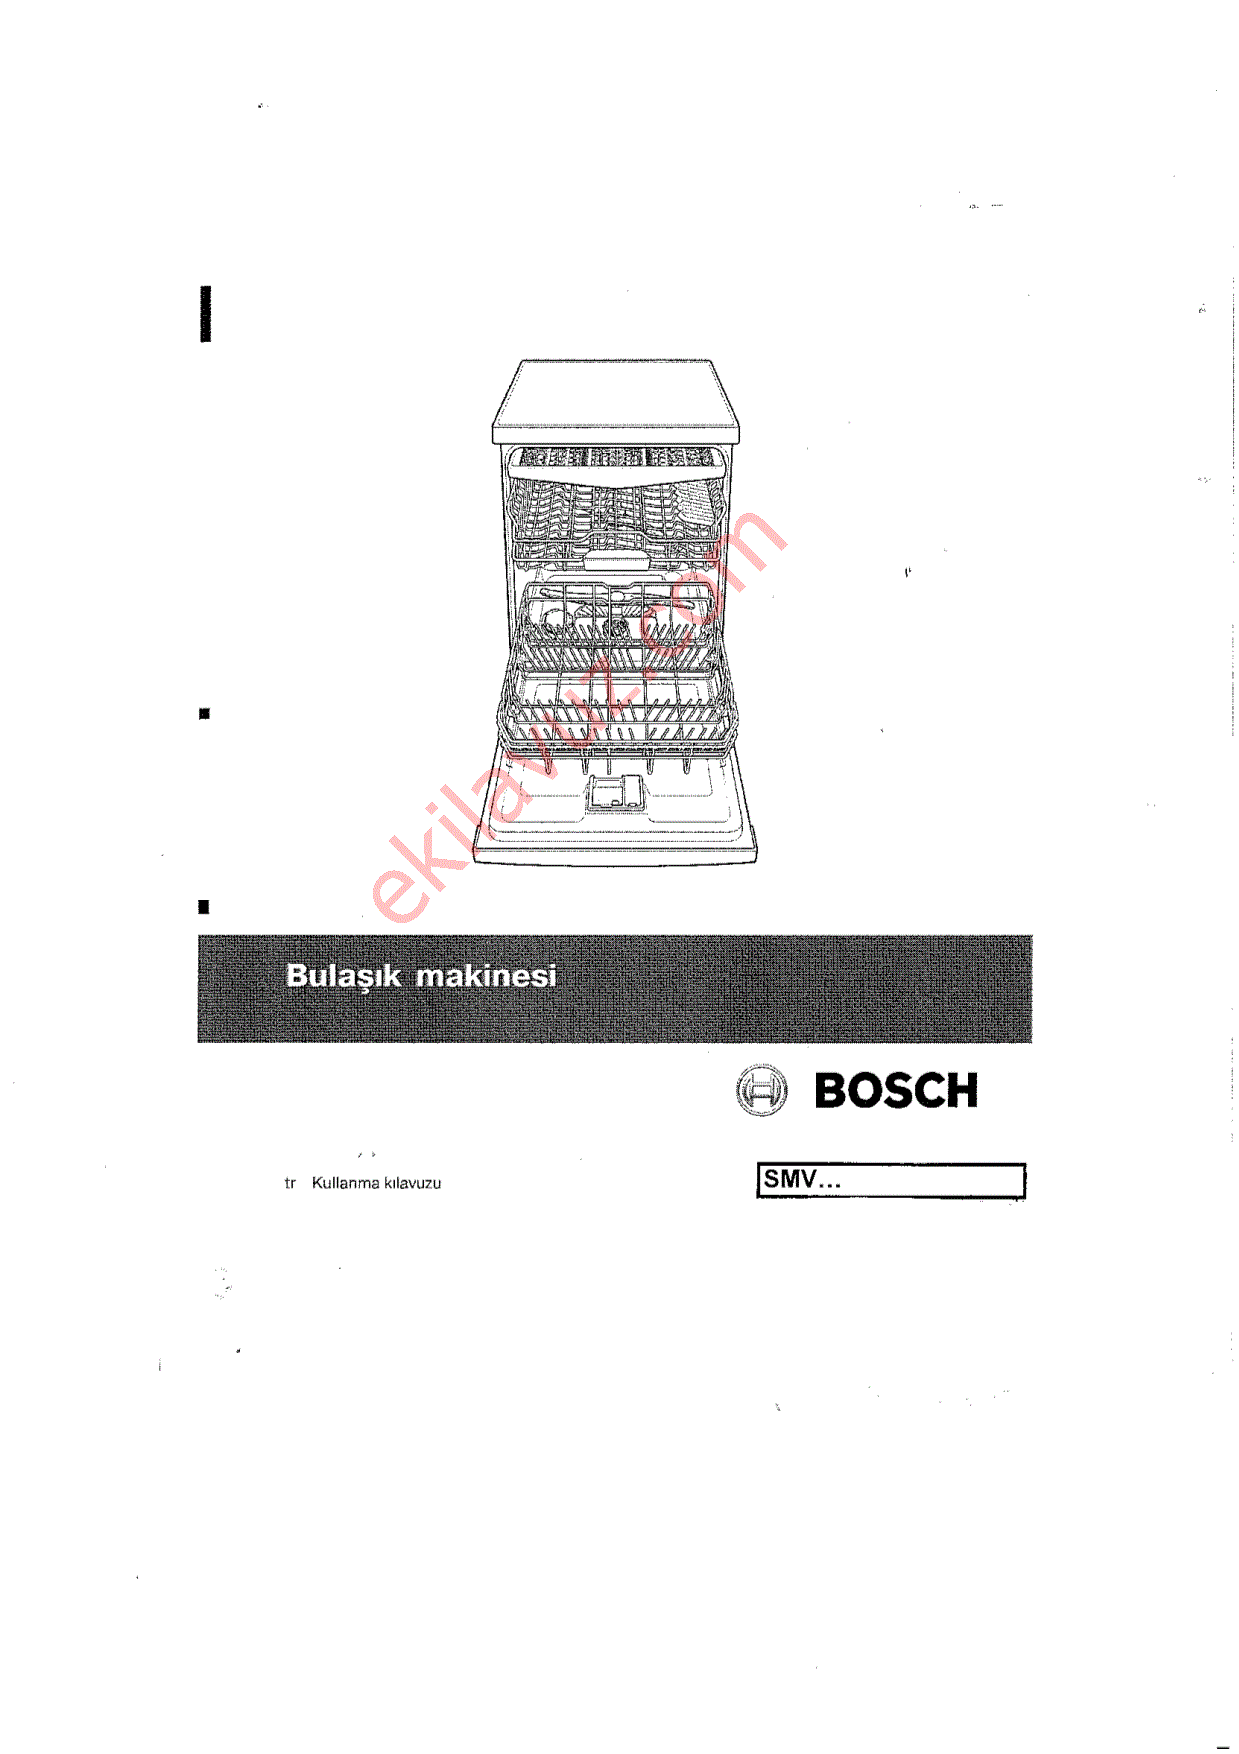 Bosch Smv Serisi Tum Modeller Bulasik Makinesi Kullanma Kilavuzu